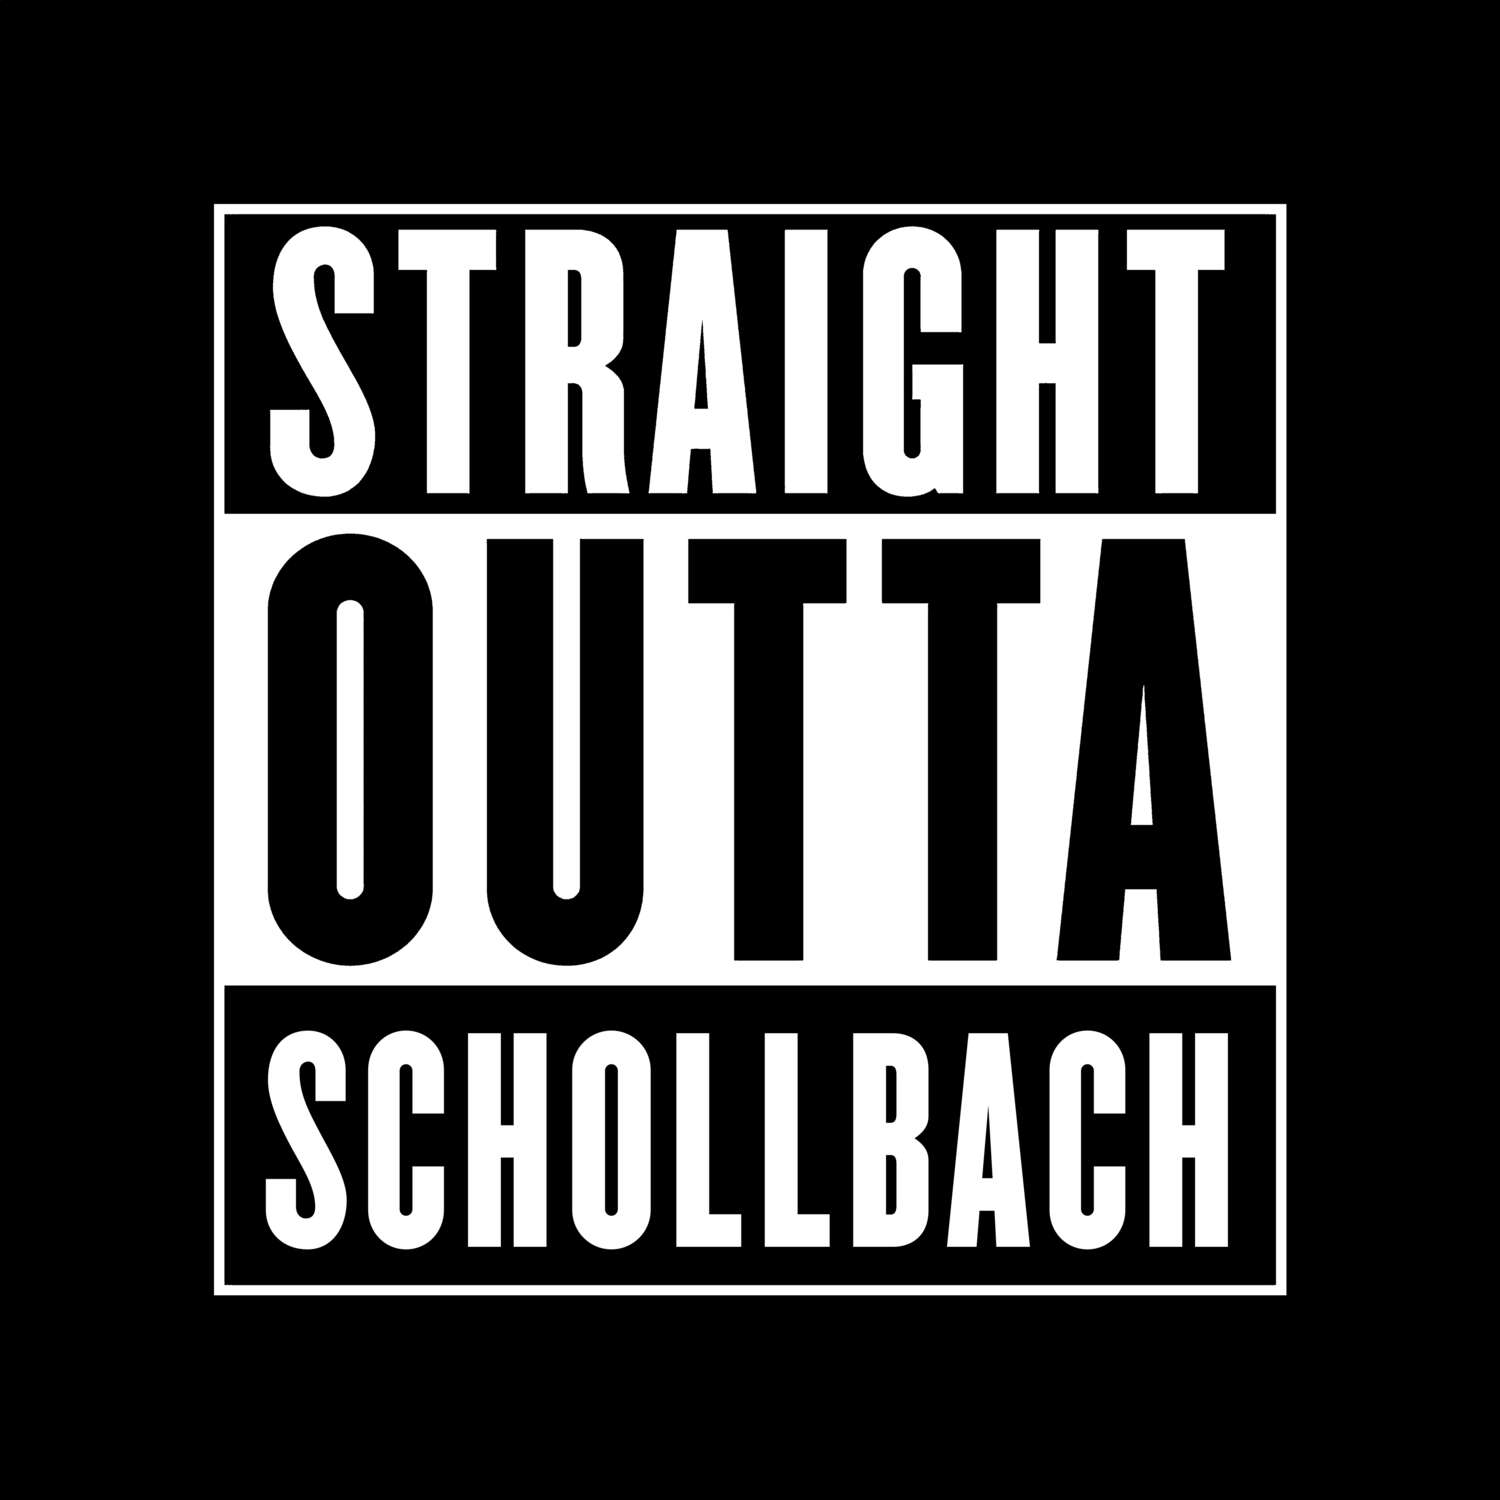 Schollbach T-Shirt »Straight Outta«